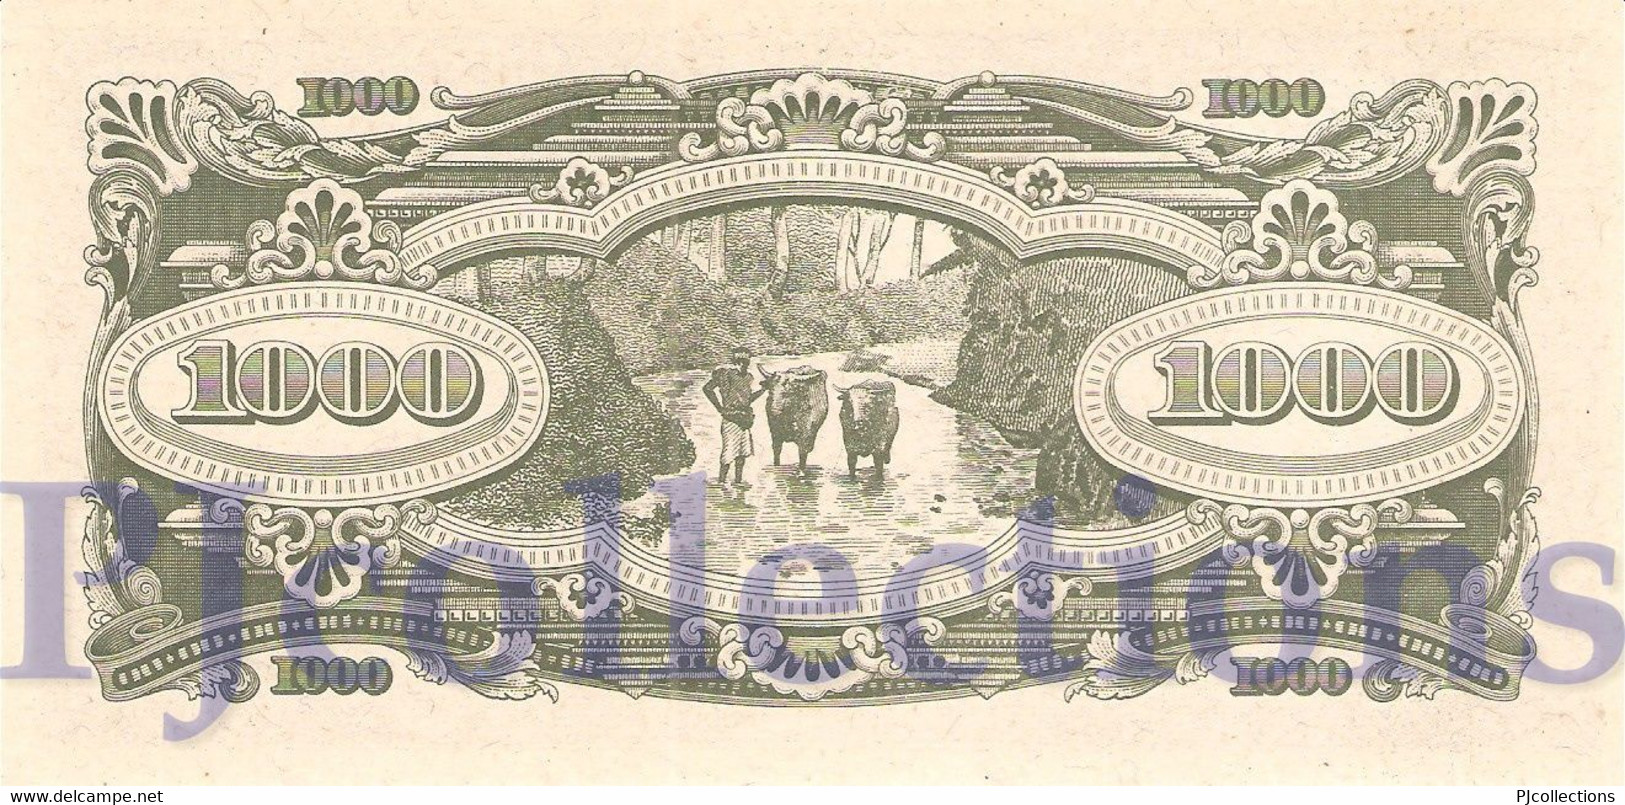 MALAYA 1000 DOLLARS 1945 PICK M10b UNC - Other - Asia